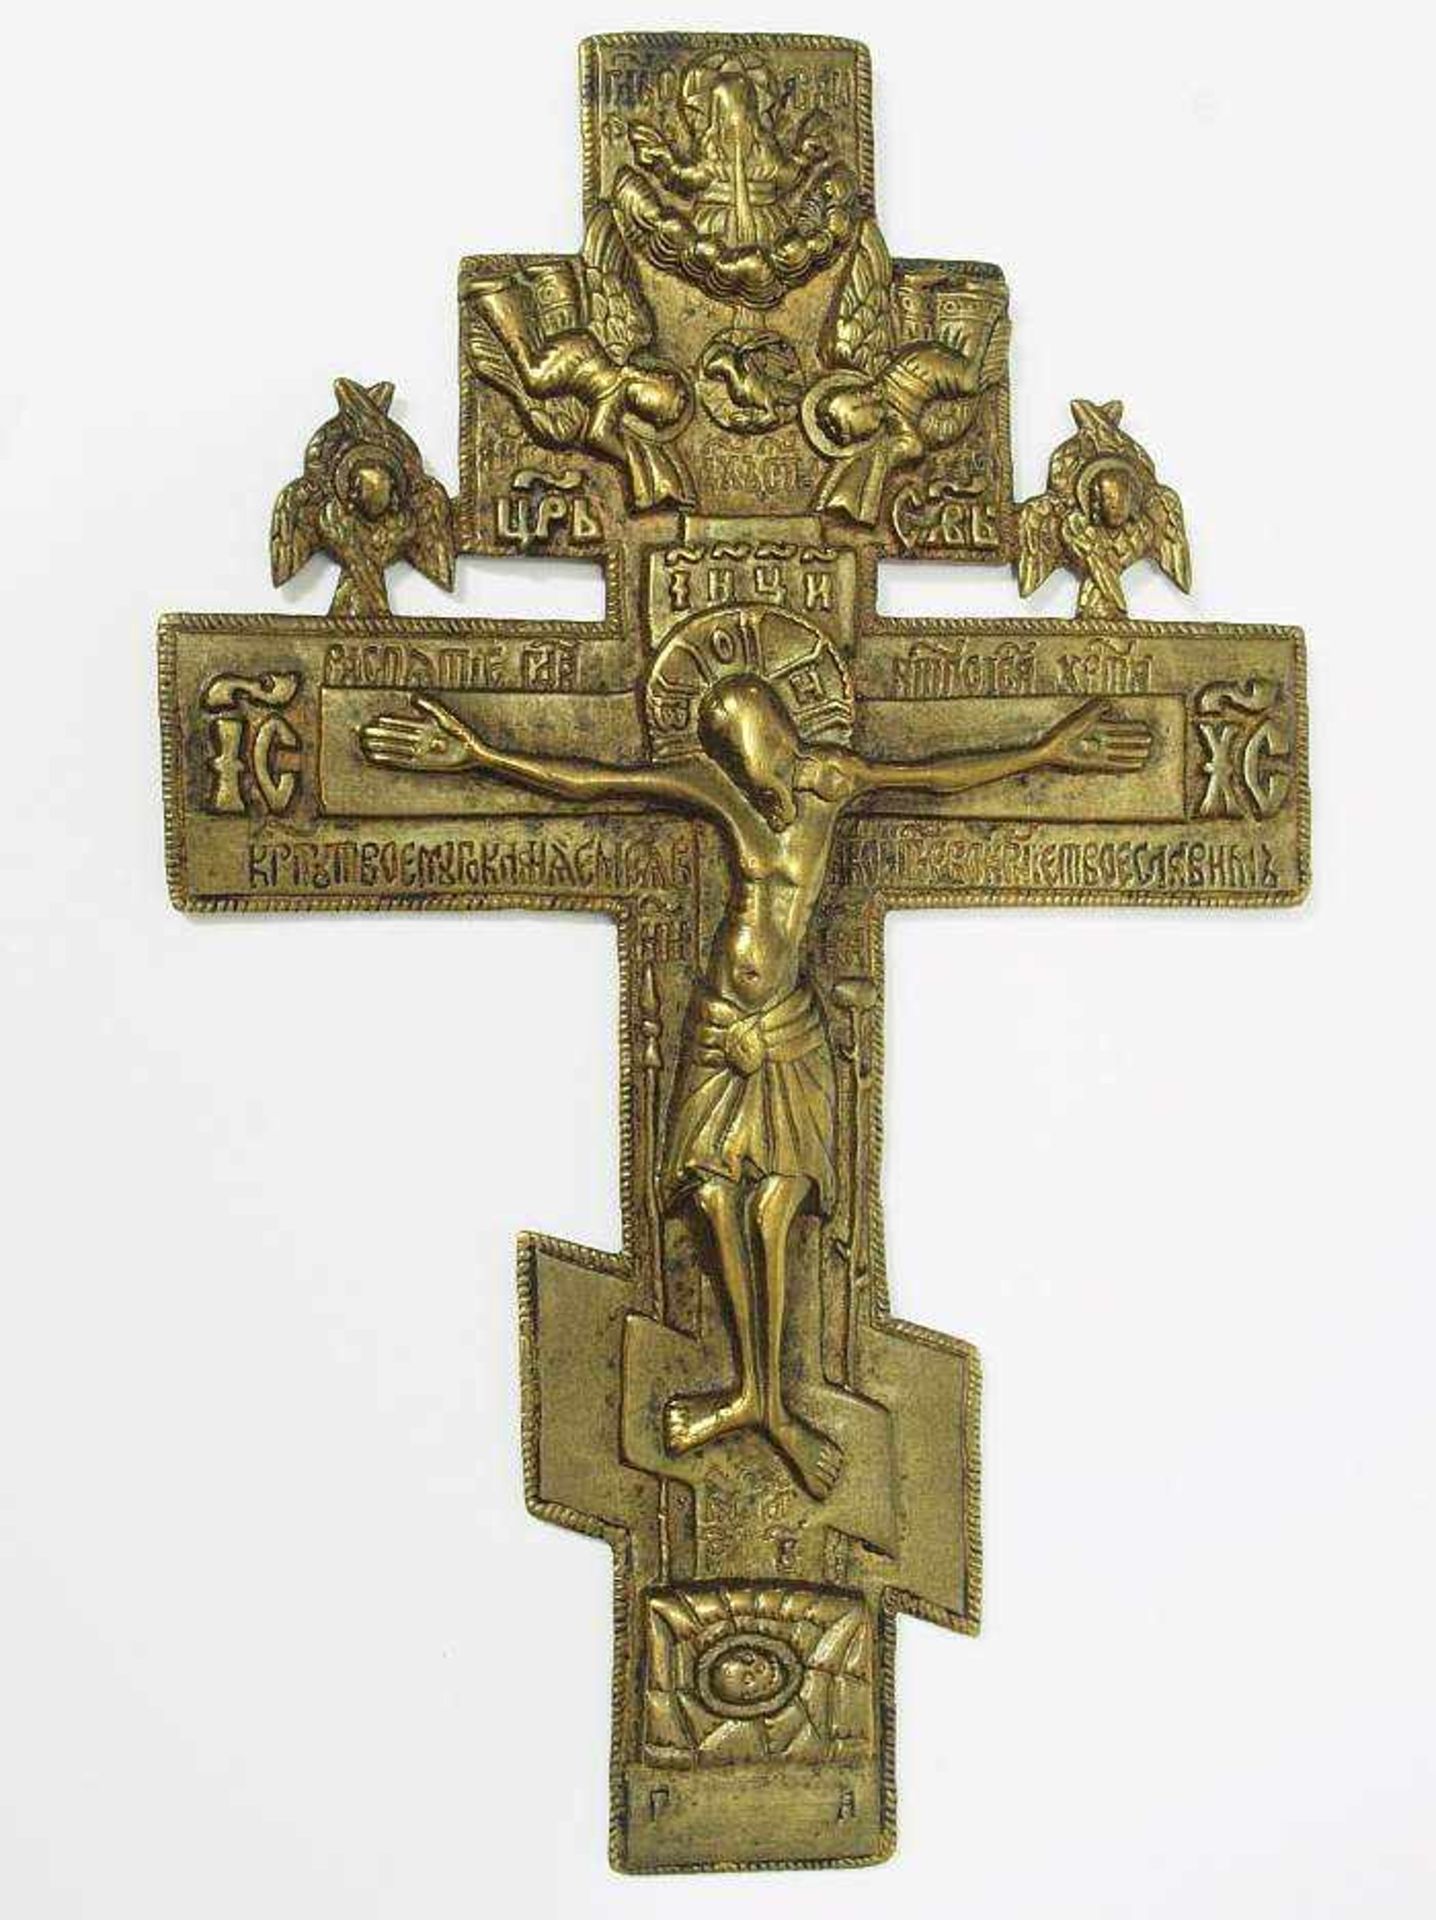 Segenskreuz.Segenskreuz. Russland, 18. Jahrhundert. Messing. Reliefierte Darstellung Christus am